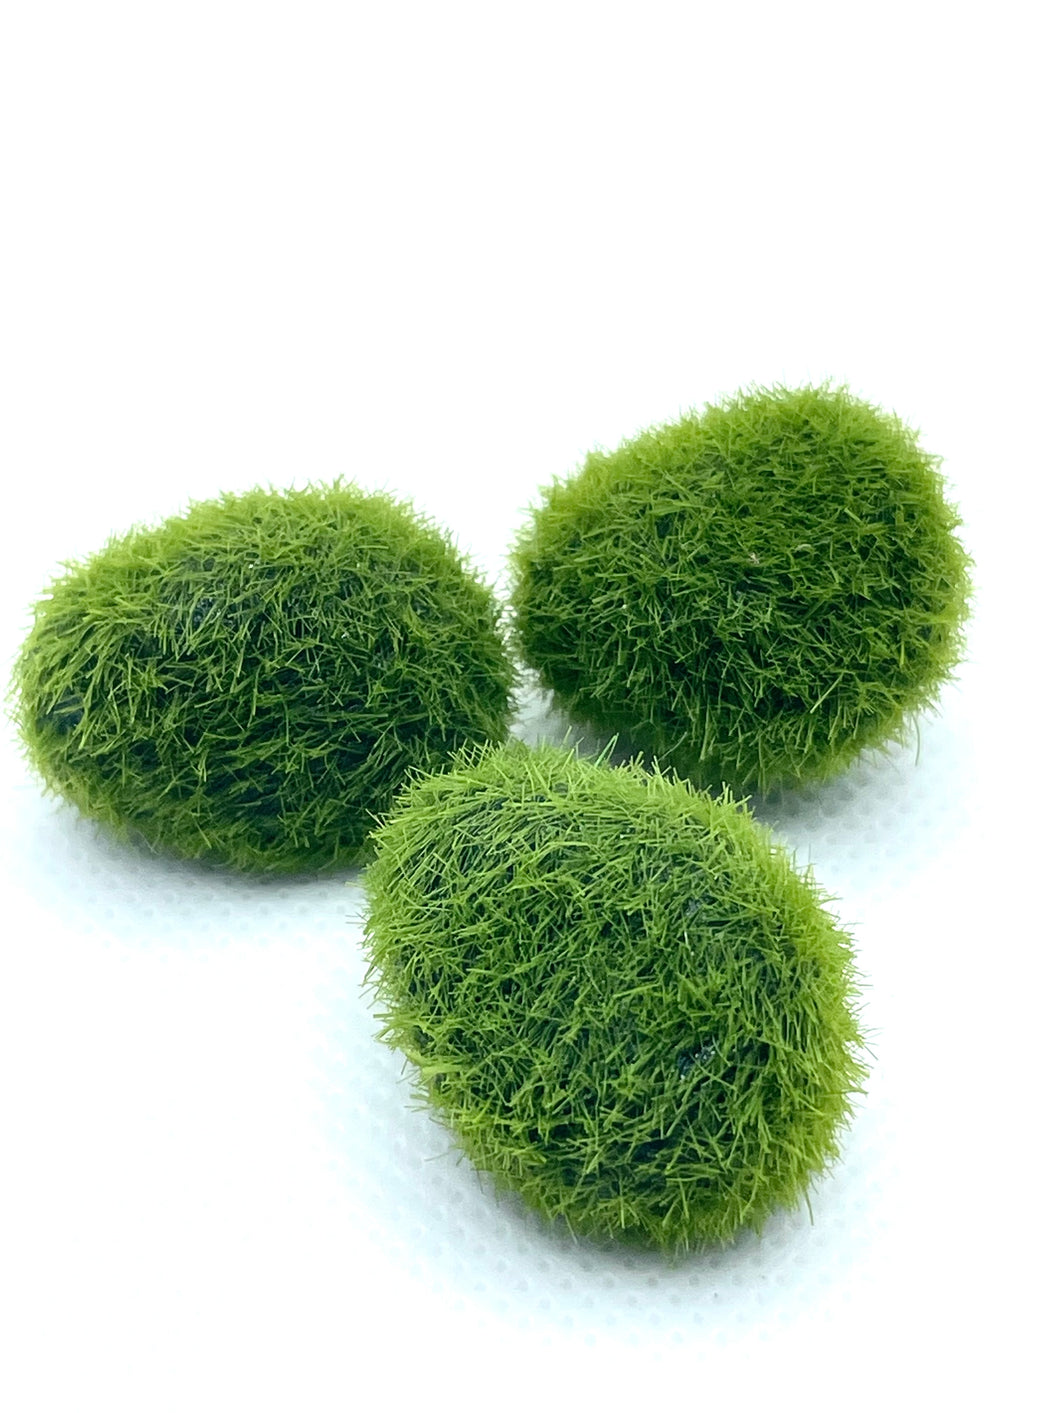 3 Artificial Marimo Moss Balls | Weighted | Aquarium Decoration